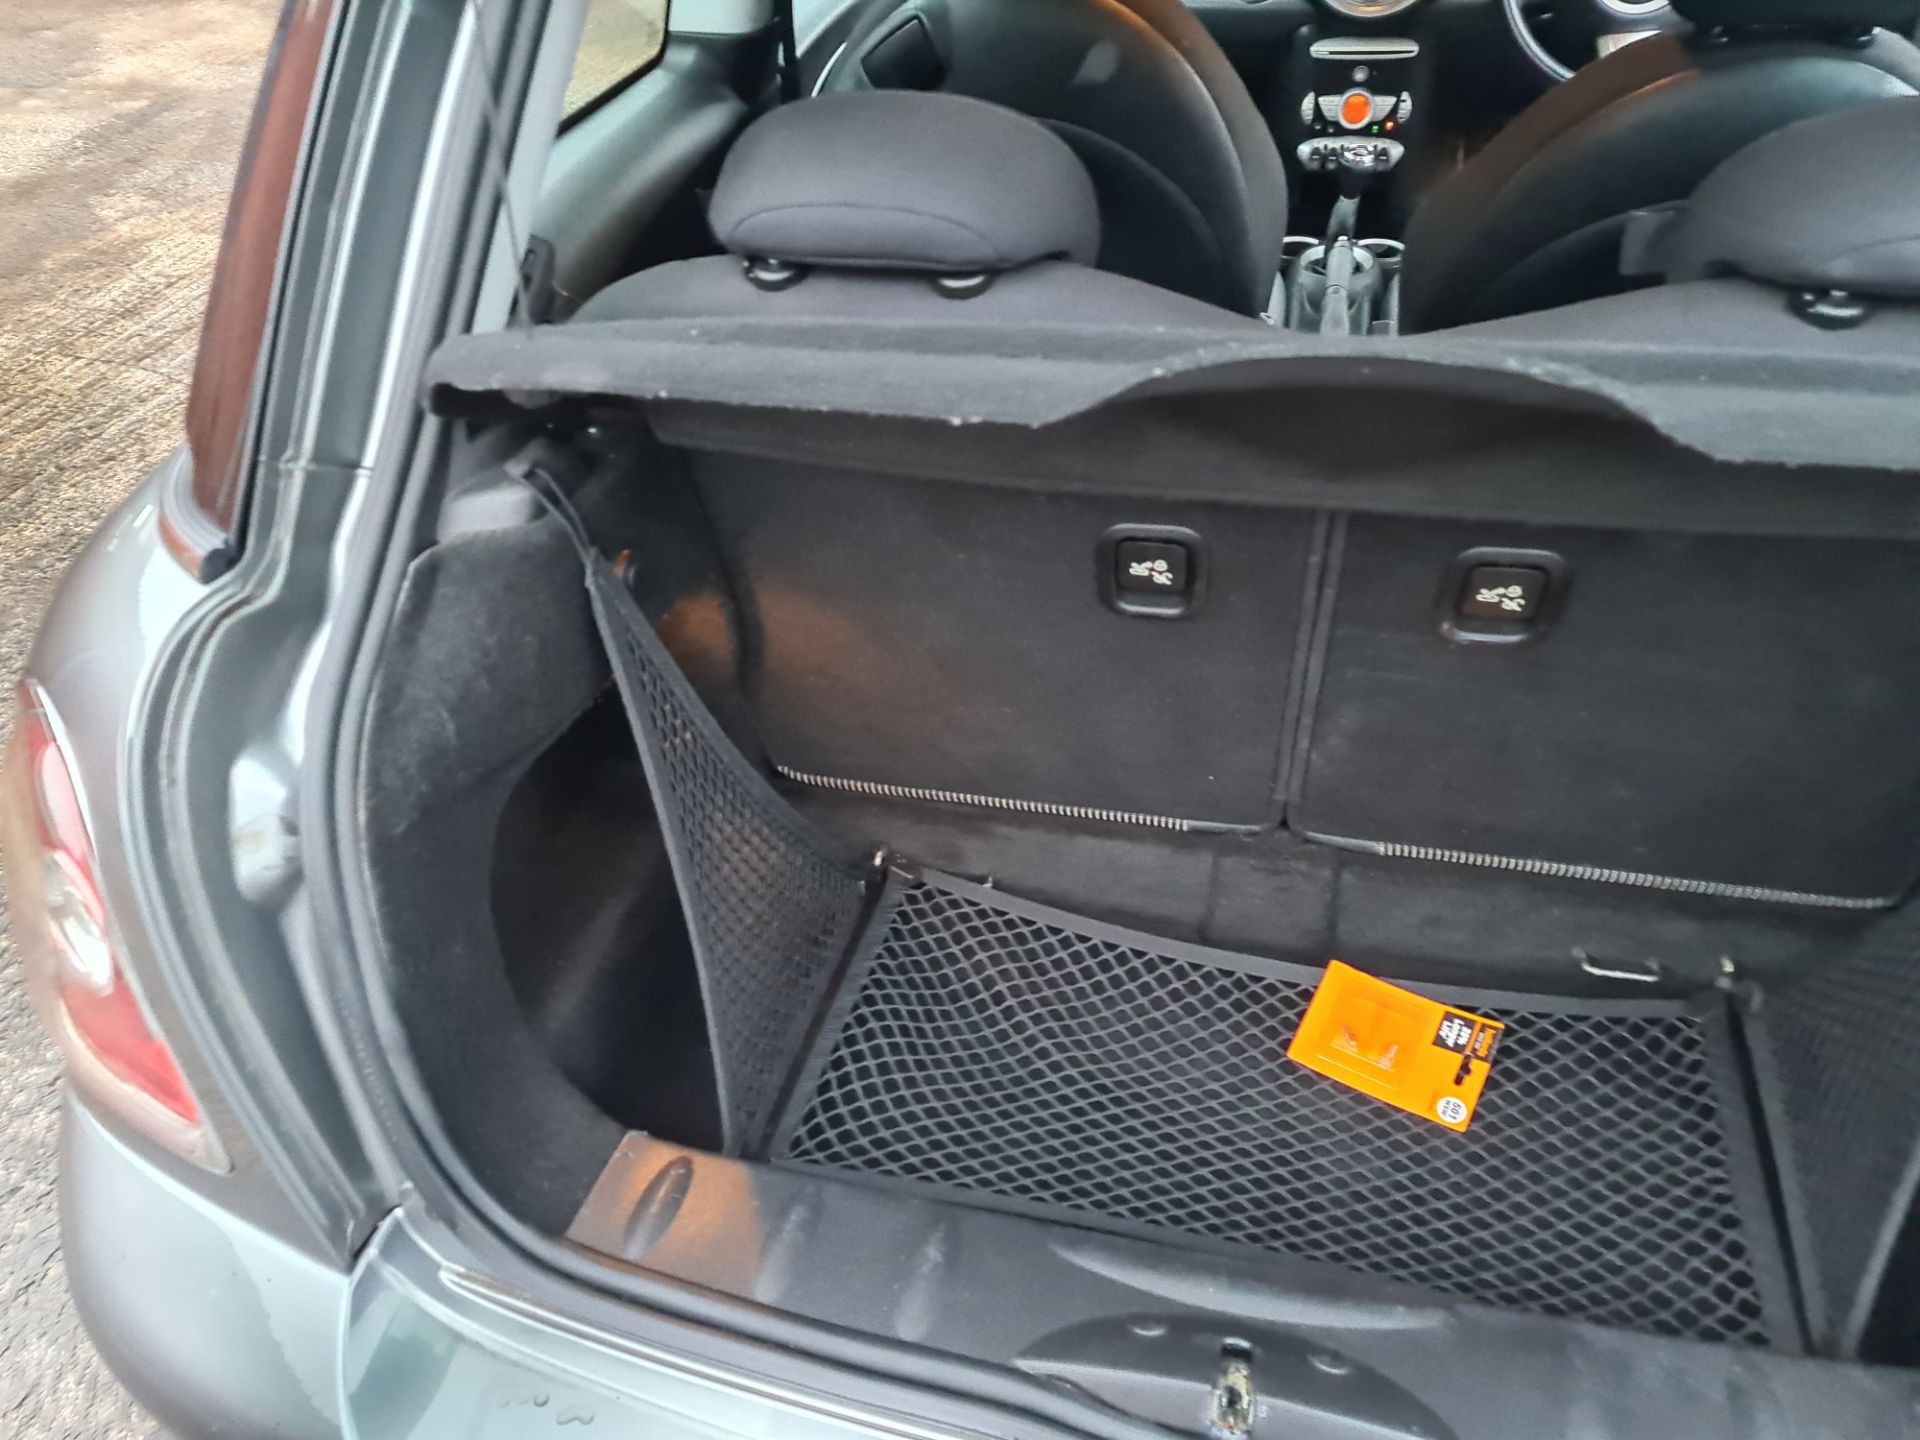 YE09 CDU Mini Cooper Graphite 3 door hatchback car, 6 speed manual gearbox, 1598cc petrol engine. C - Image 25 of 56